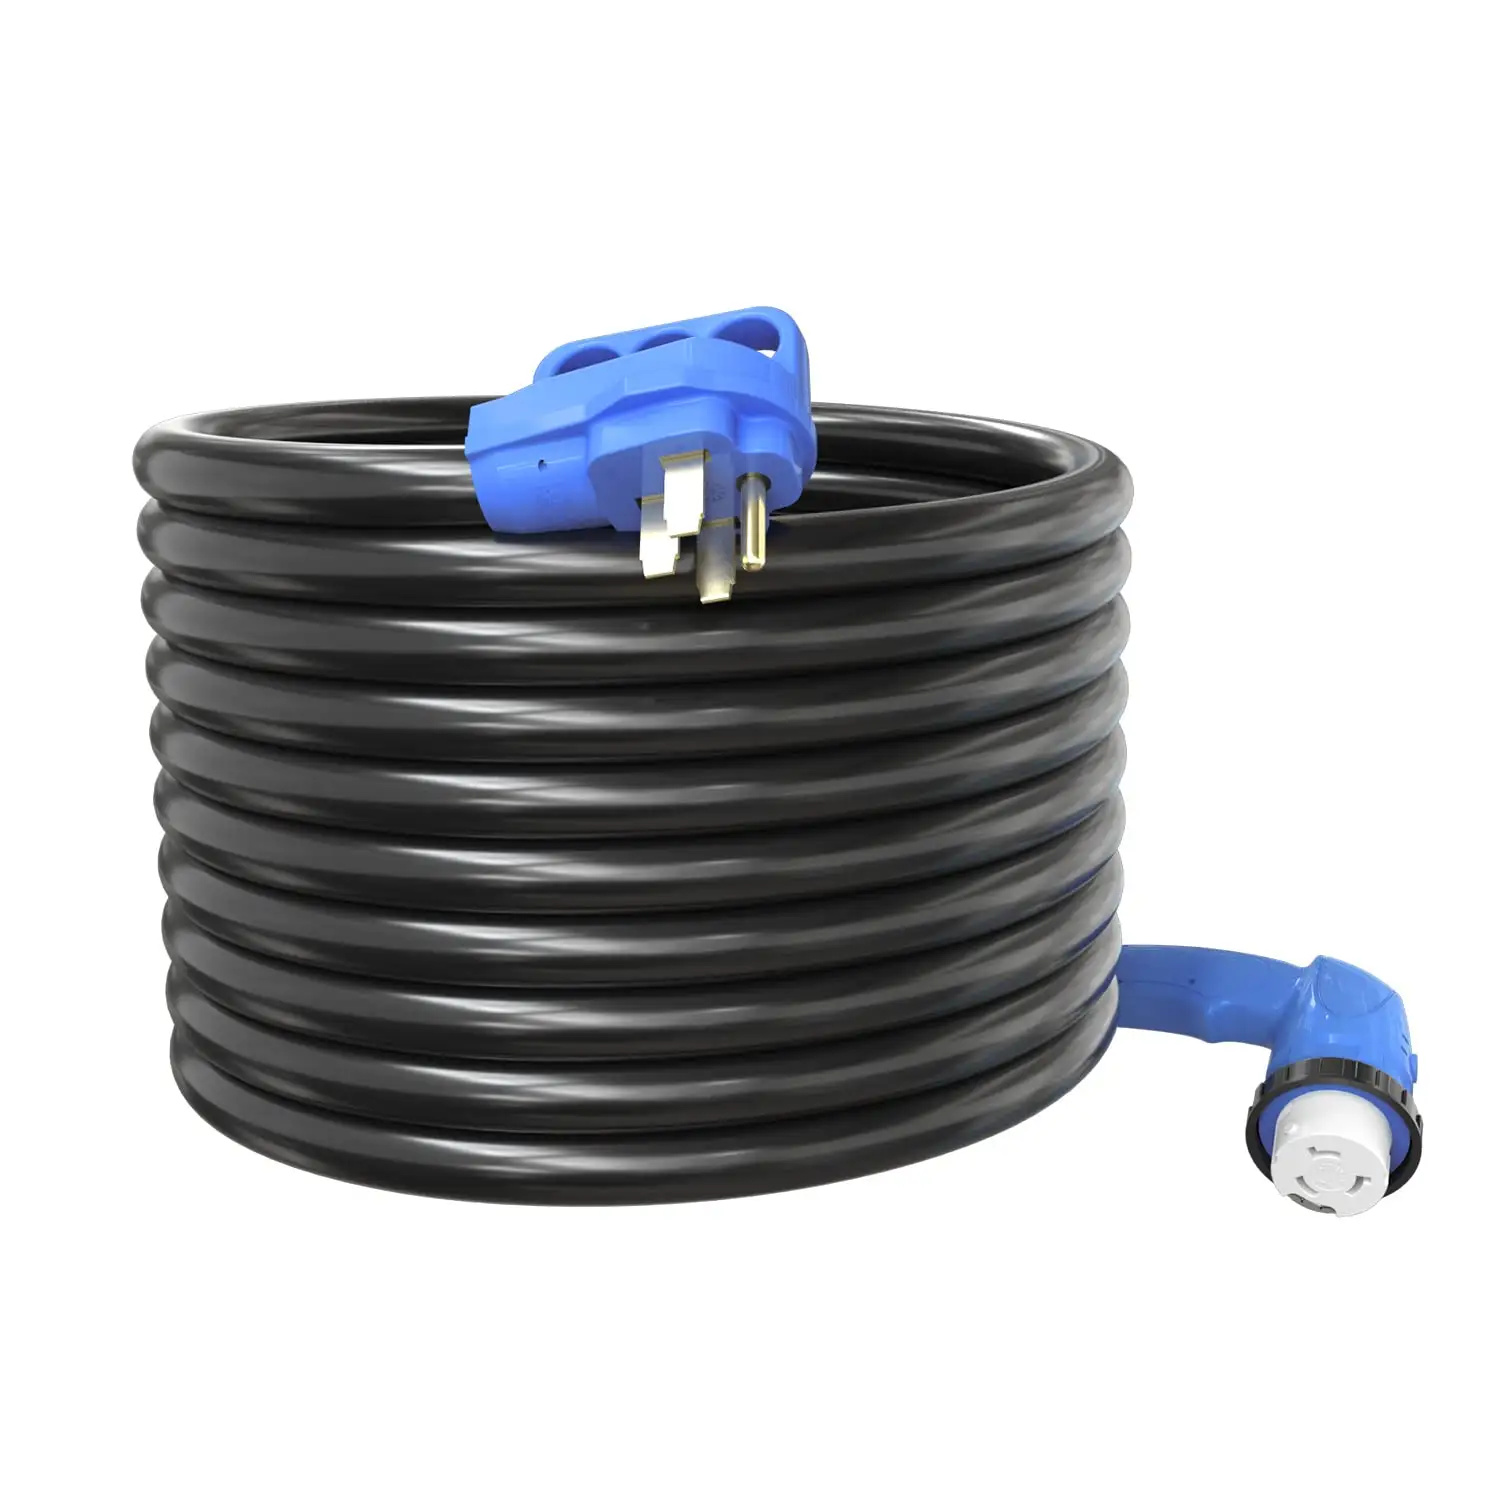 RV Accessories RV Parts Power Cable Extension Cords Customization Nema Type 5-15R 5-15P TT-30R TT-30P 14-50R